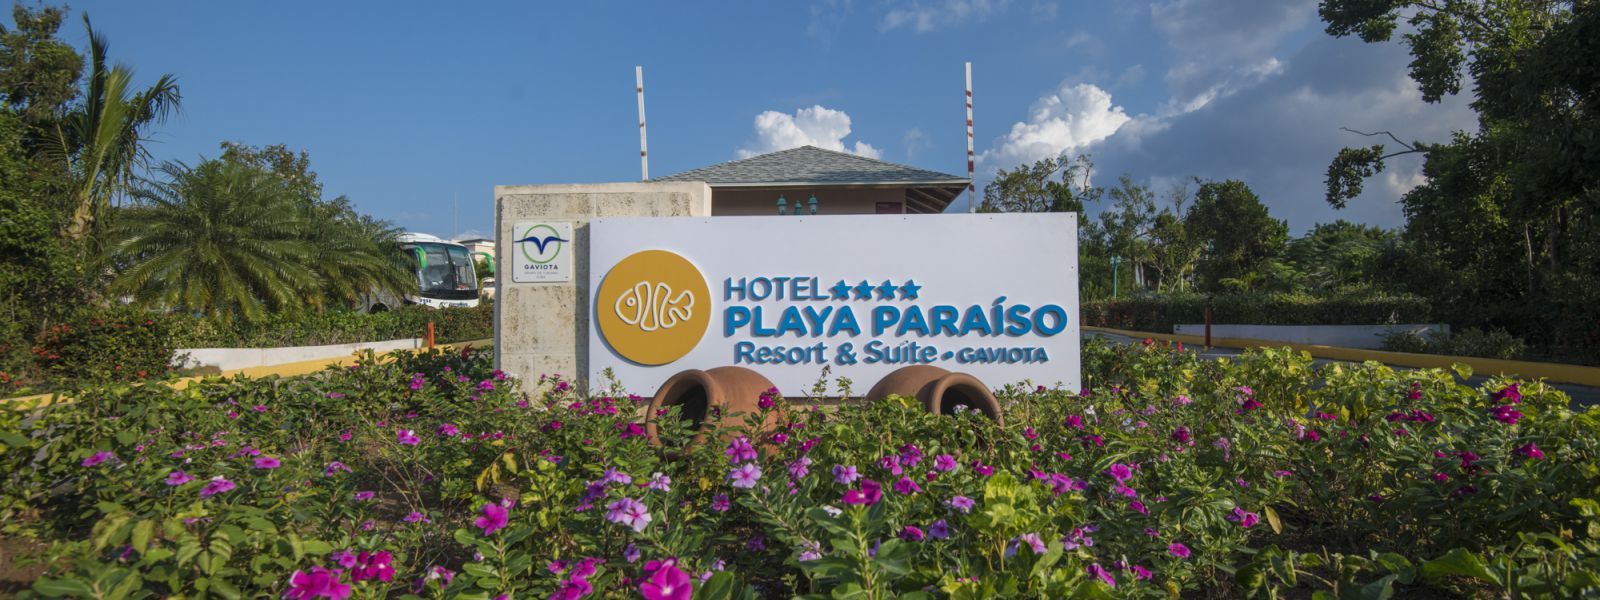 Services and Facilities | Playa Paraíso Hotel - Cuba